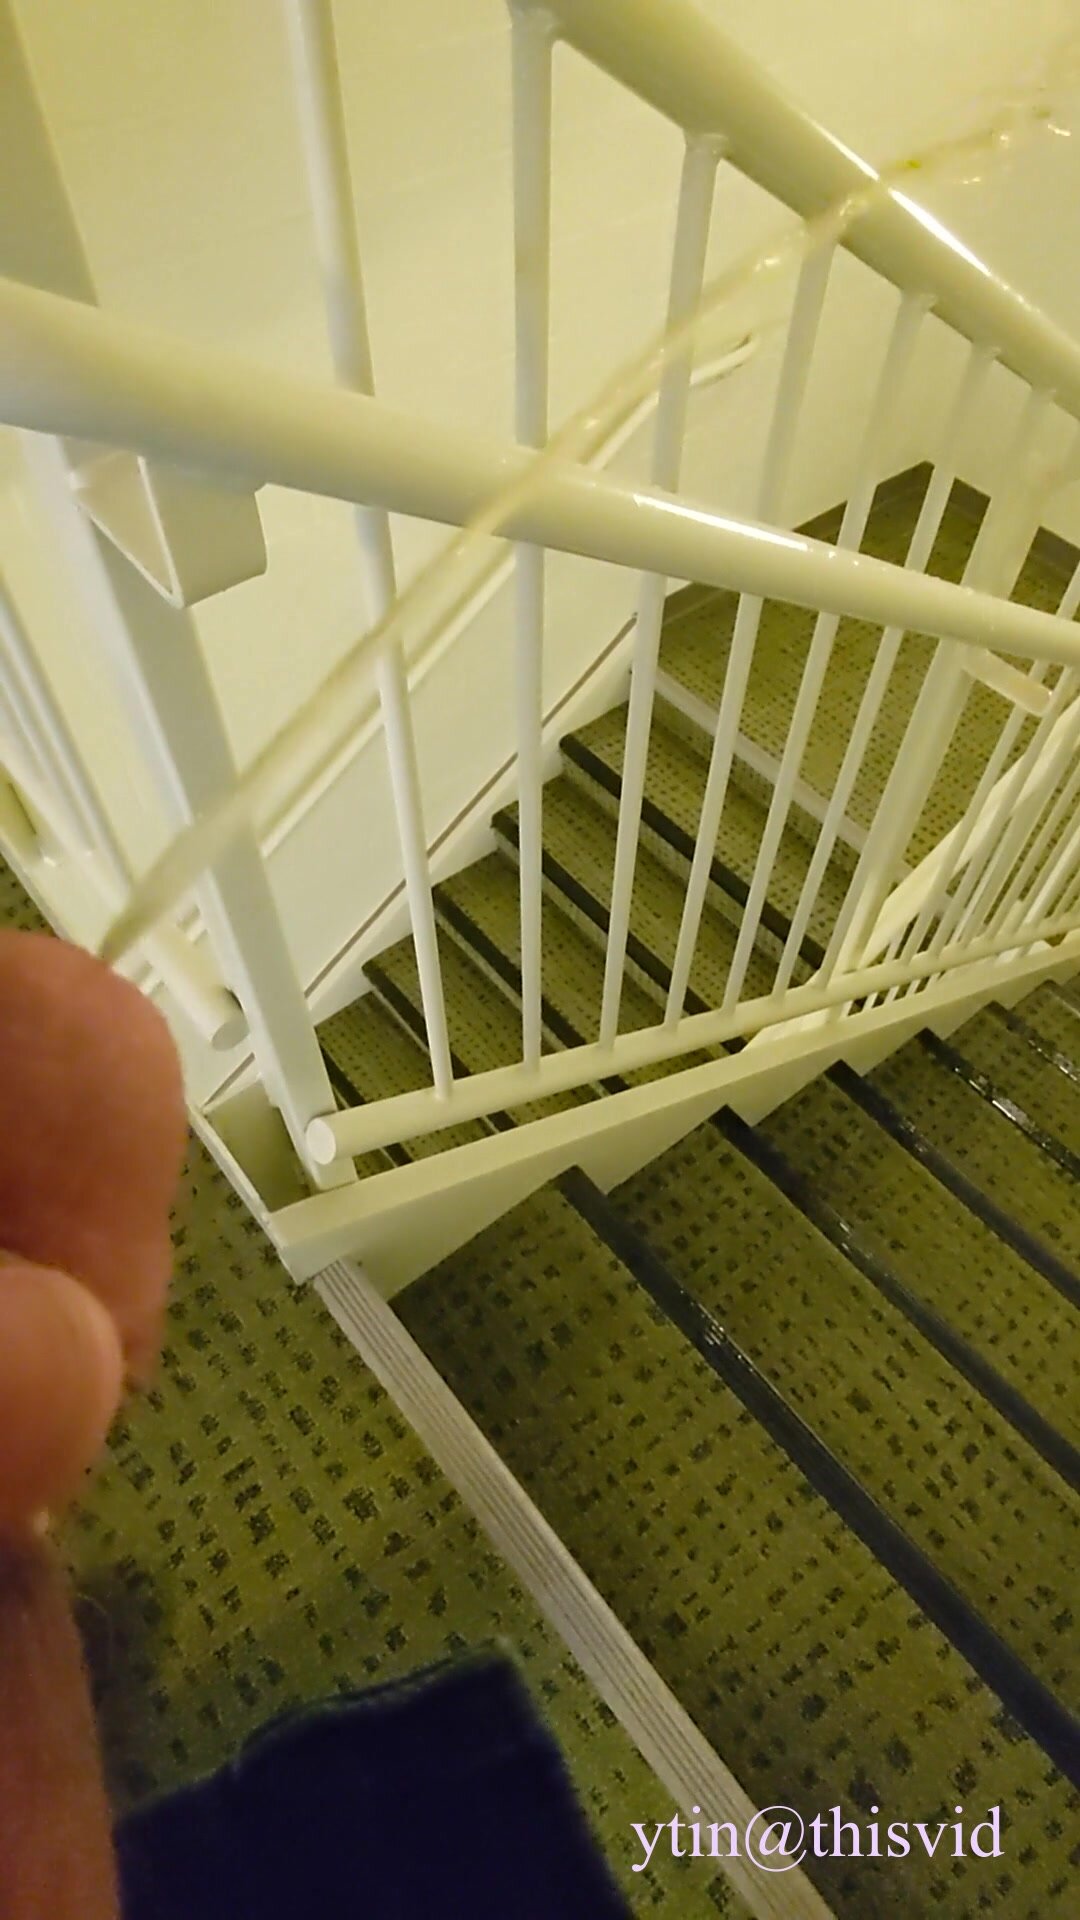 Public Hotel Stairwell Piss